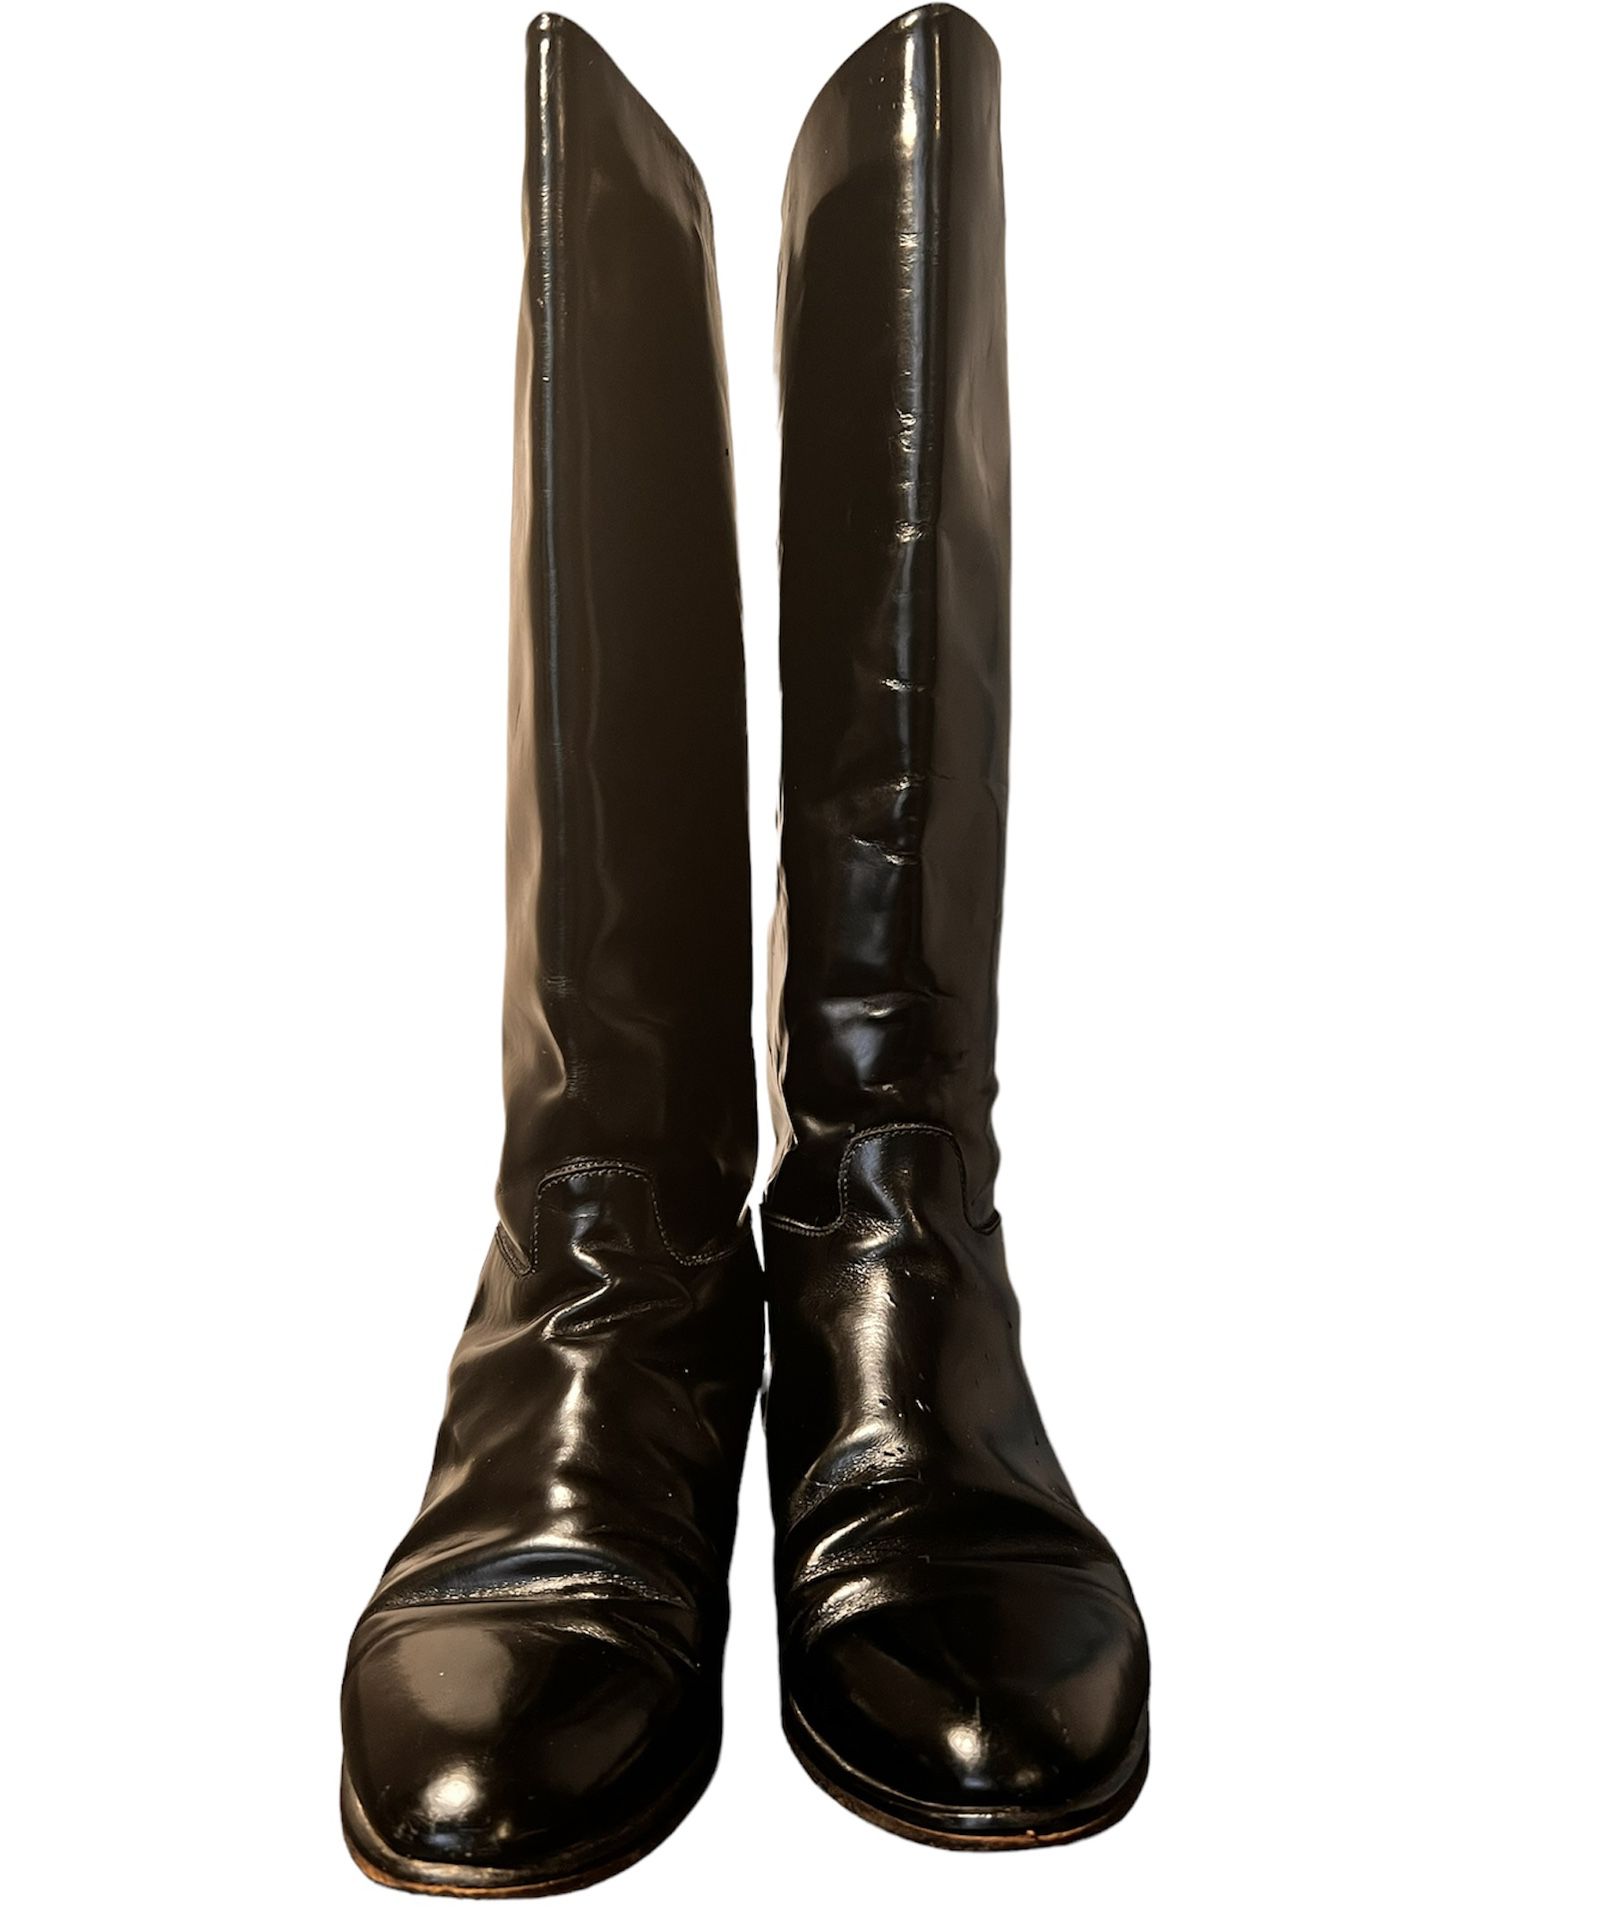 Vintage 90’s Charles David Equestrian Boots Sz 8 1/2